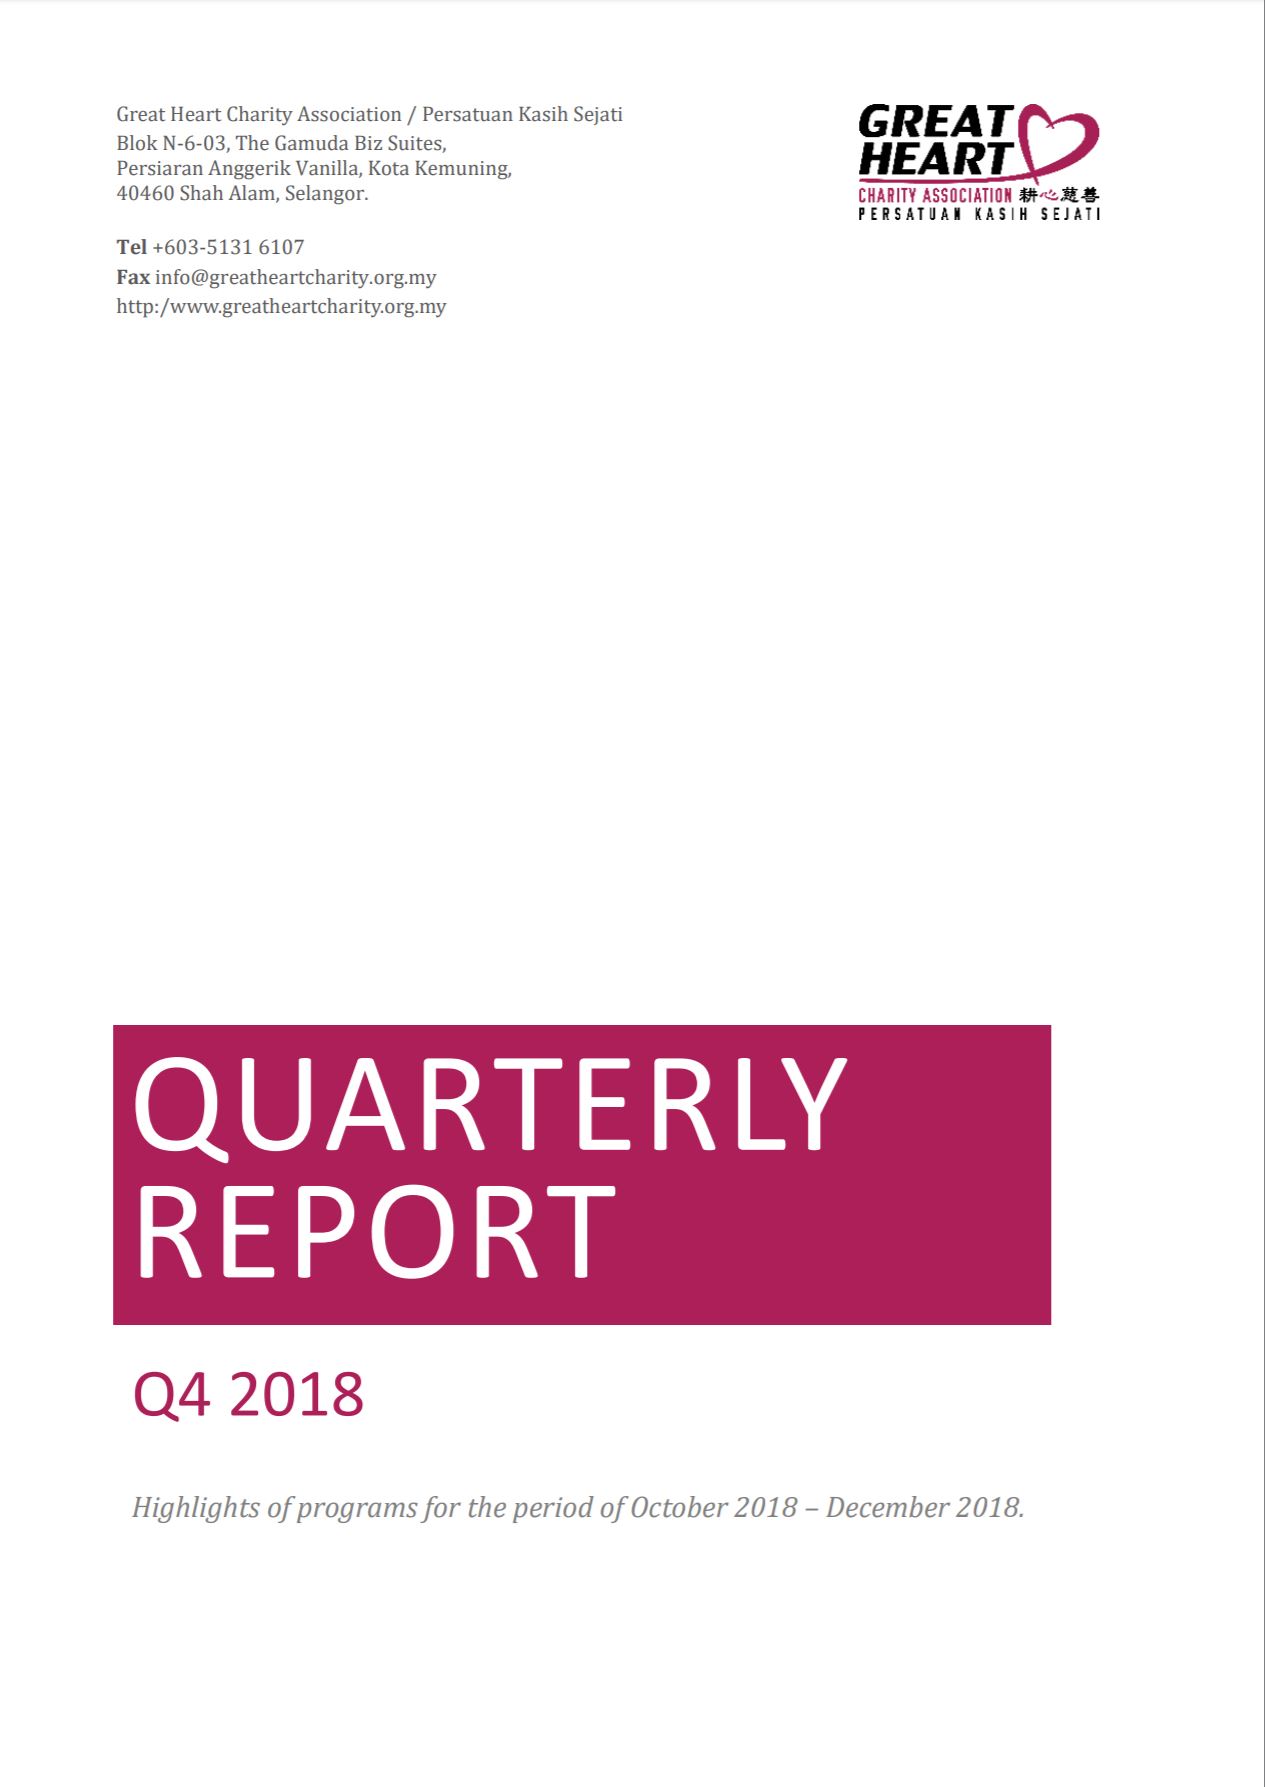 Great Heart Quarterly Report - Quarter 4 - 2018